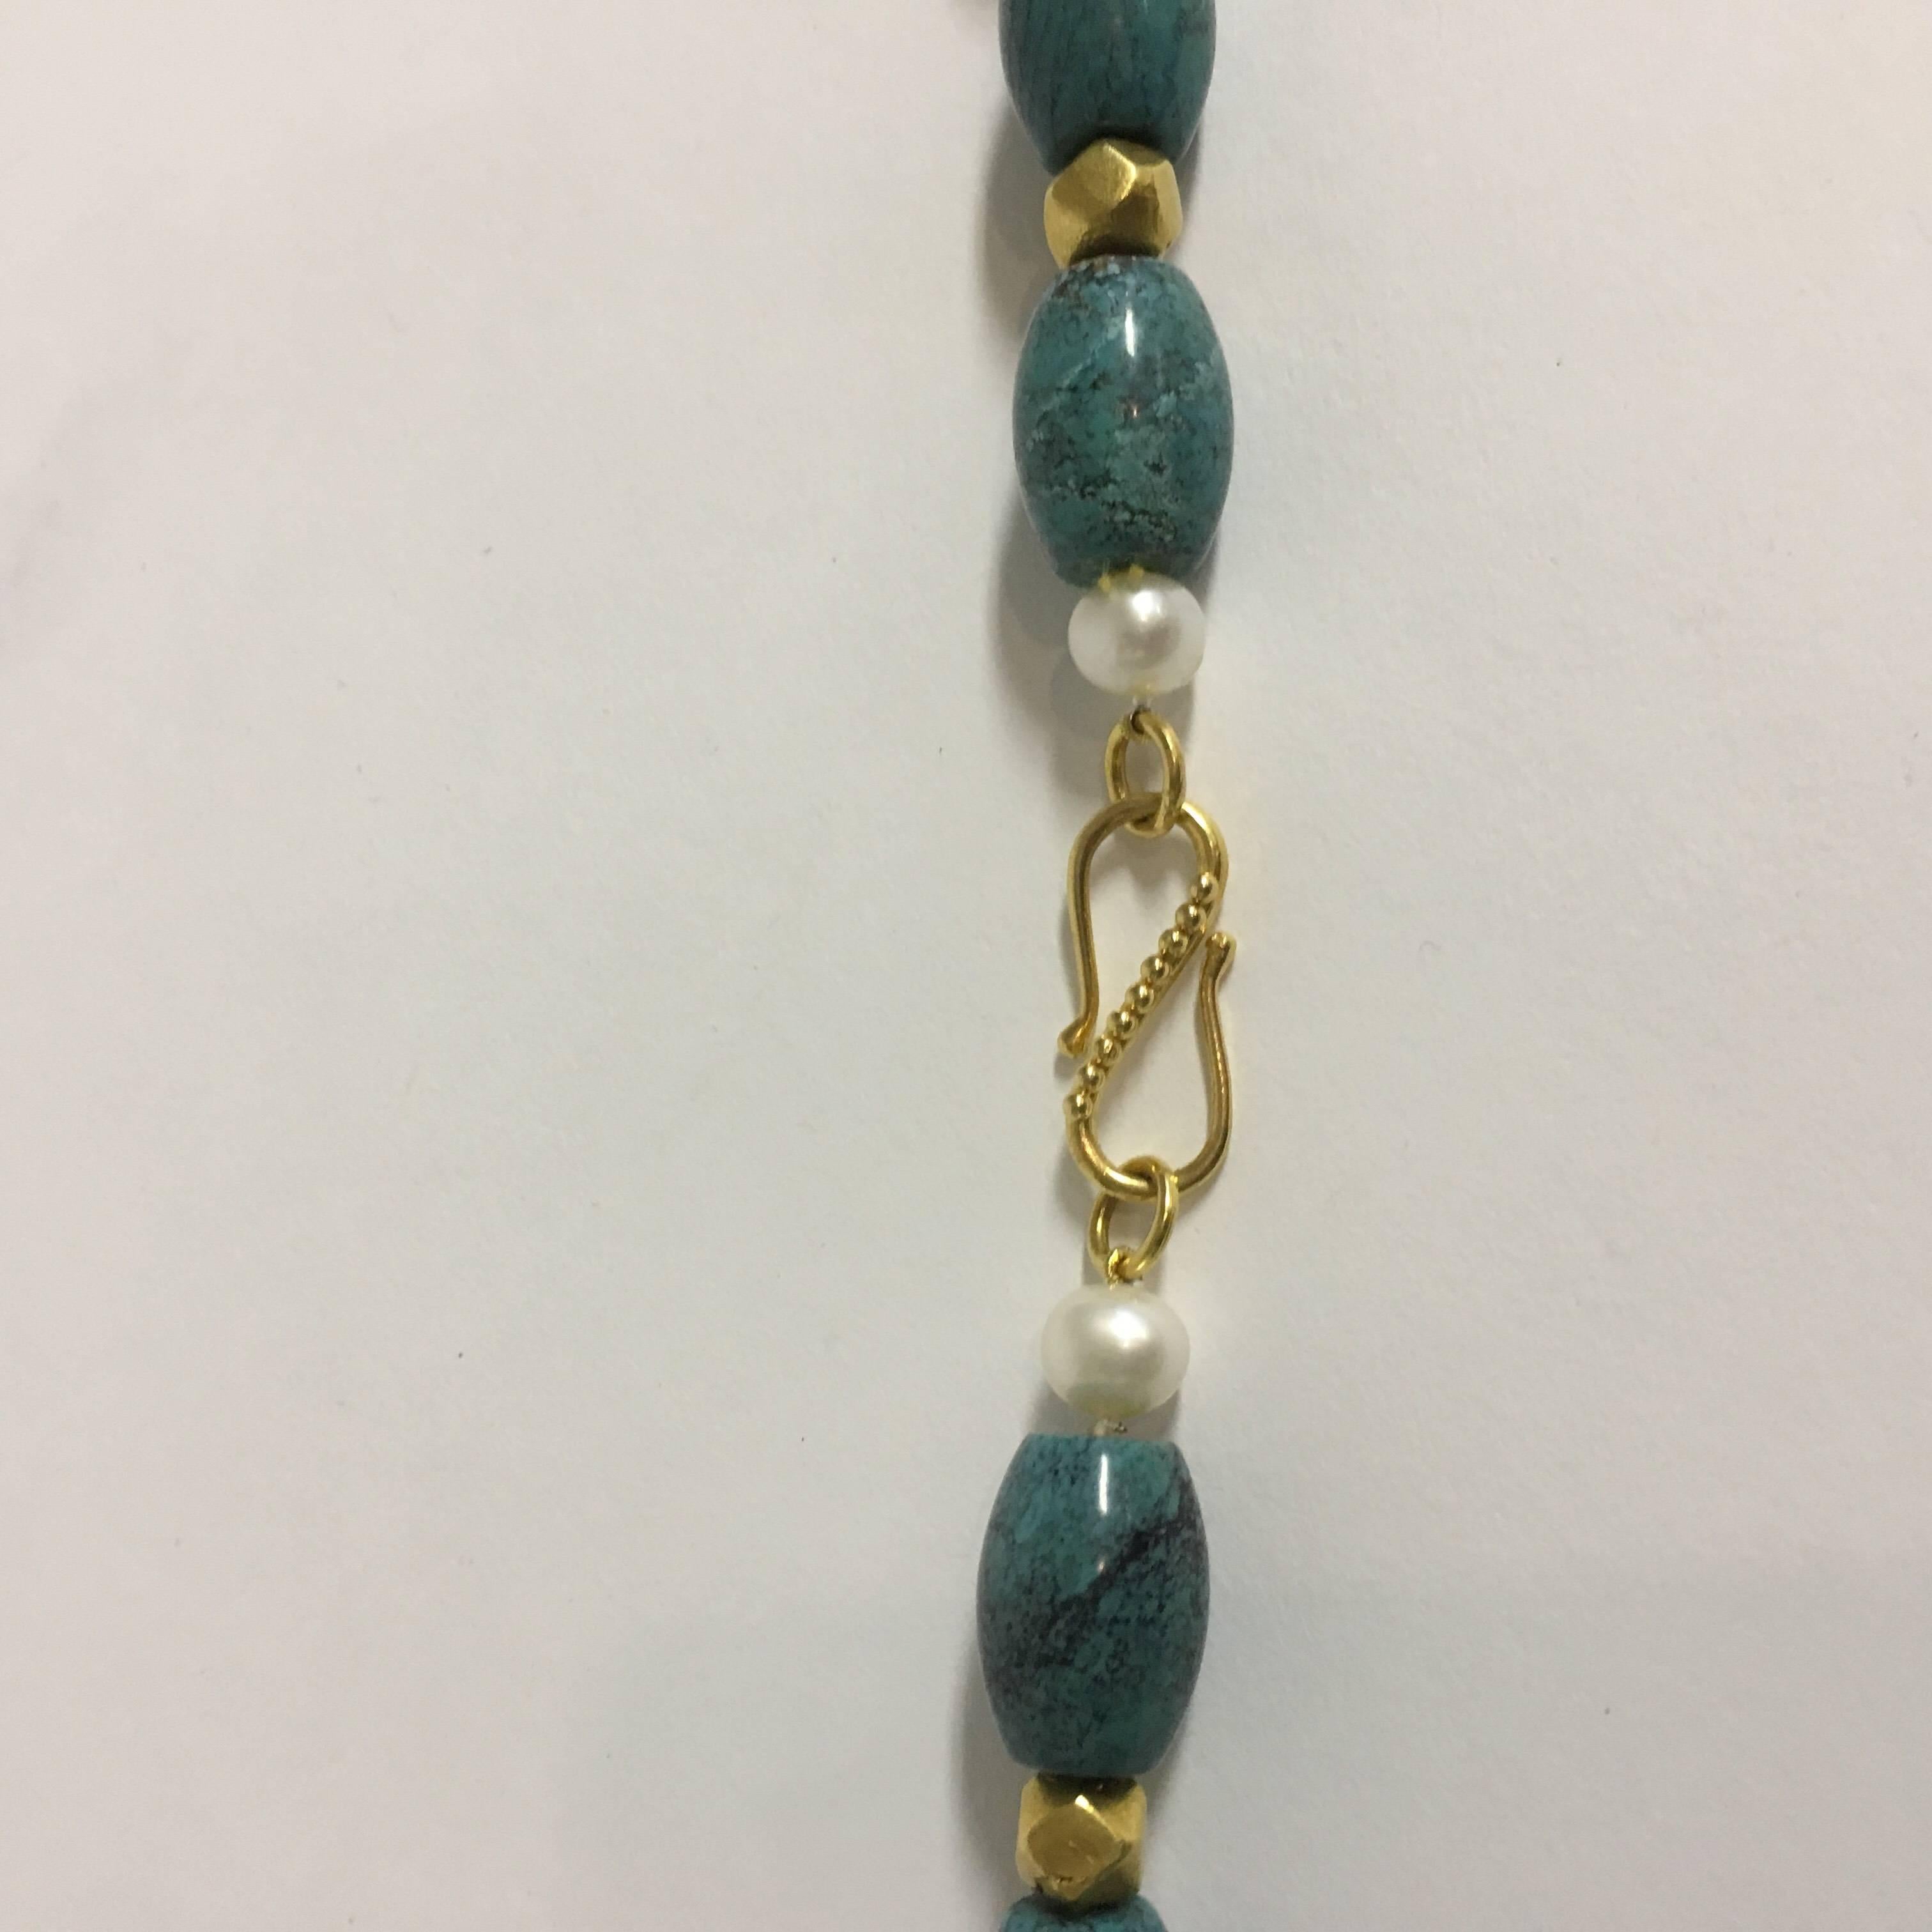 tibetan turquoise beads